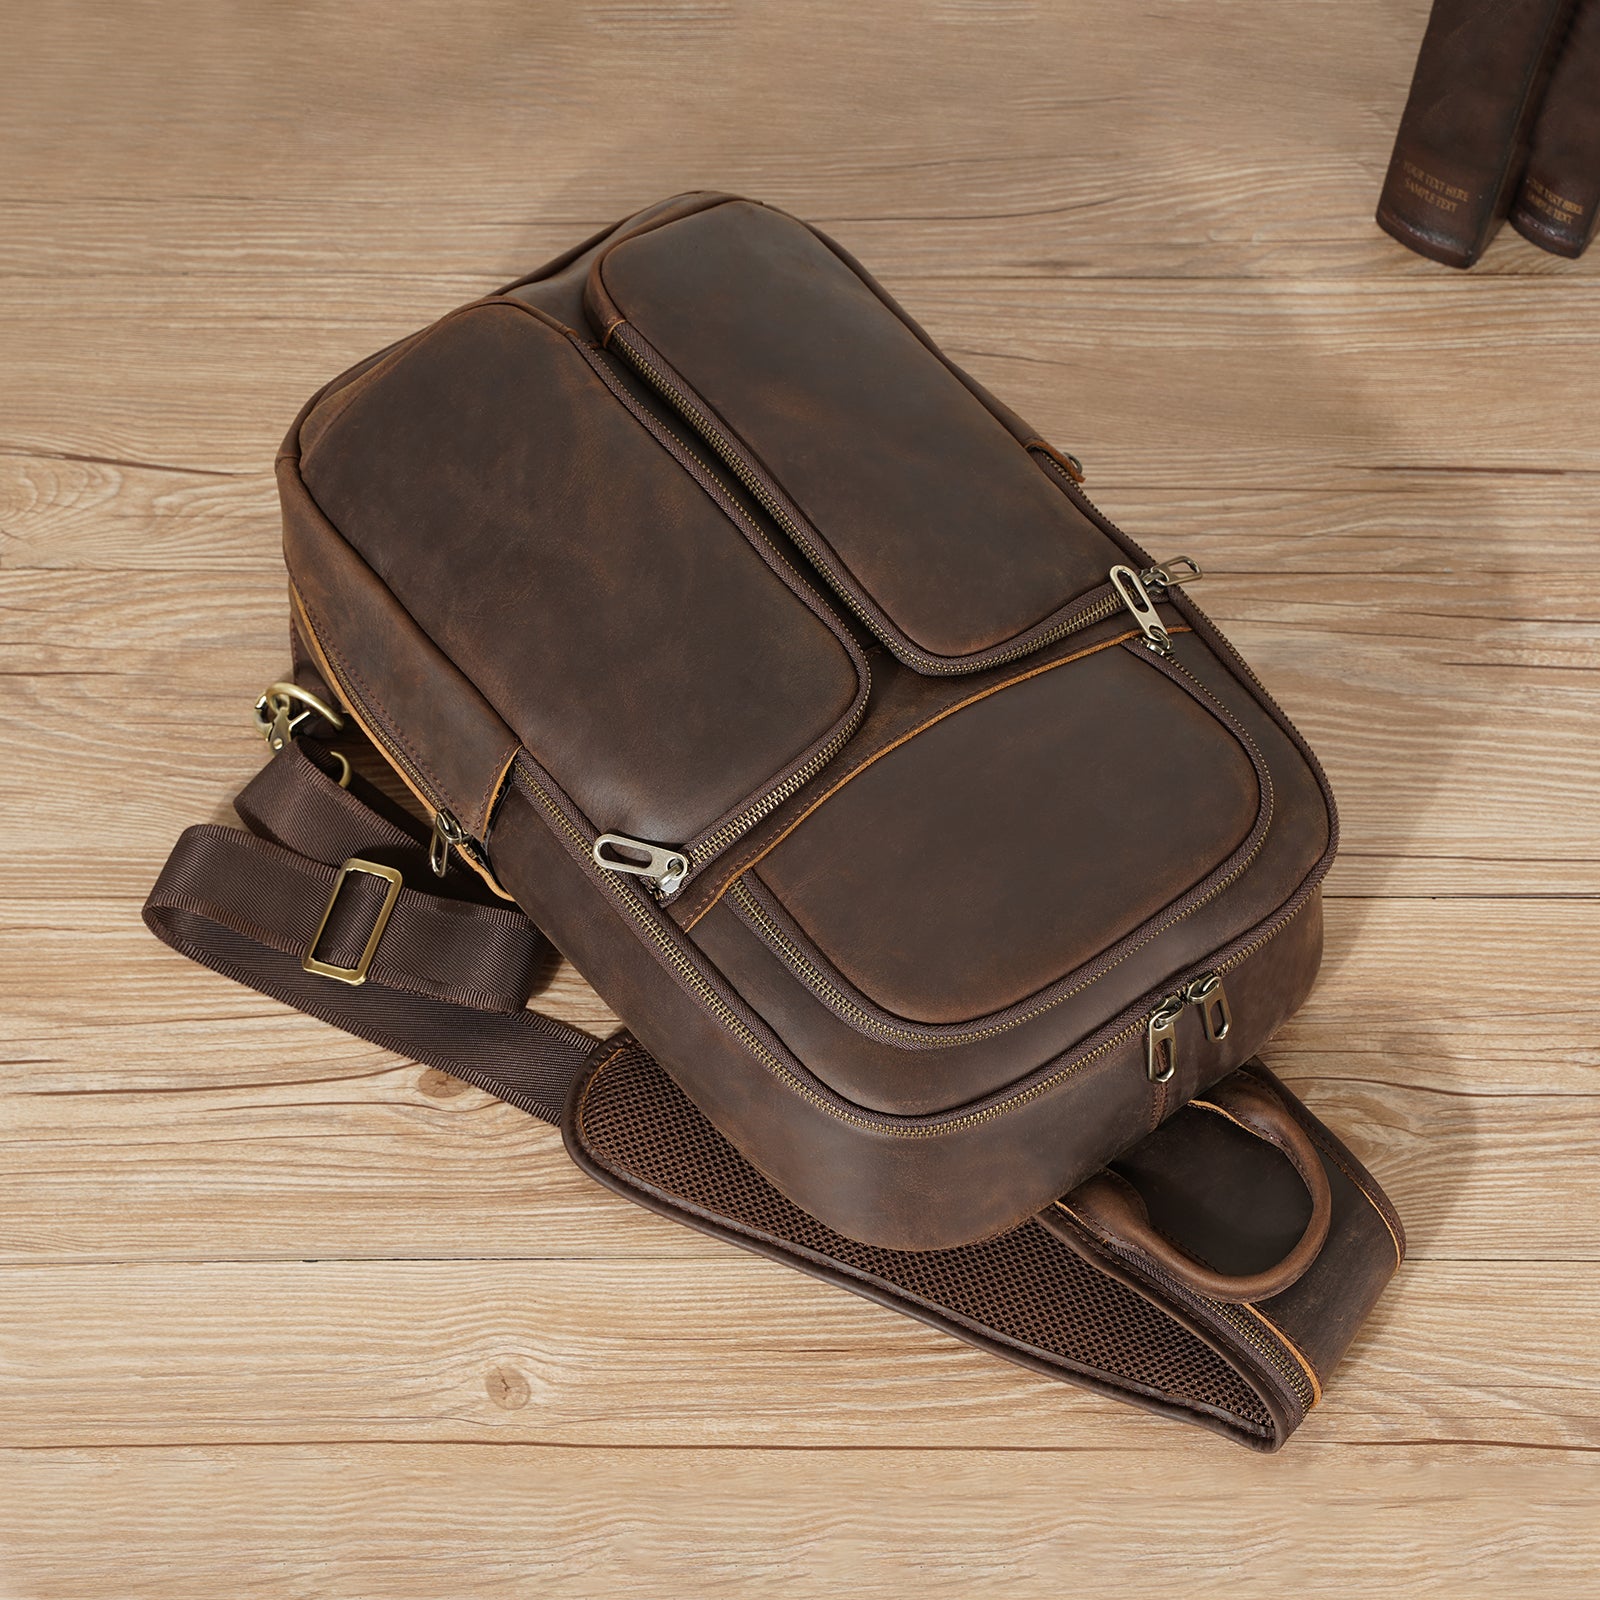 JOYIR's Genuine Casual Leather Tote Shoulder Laptop Bags for Men